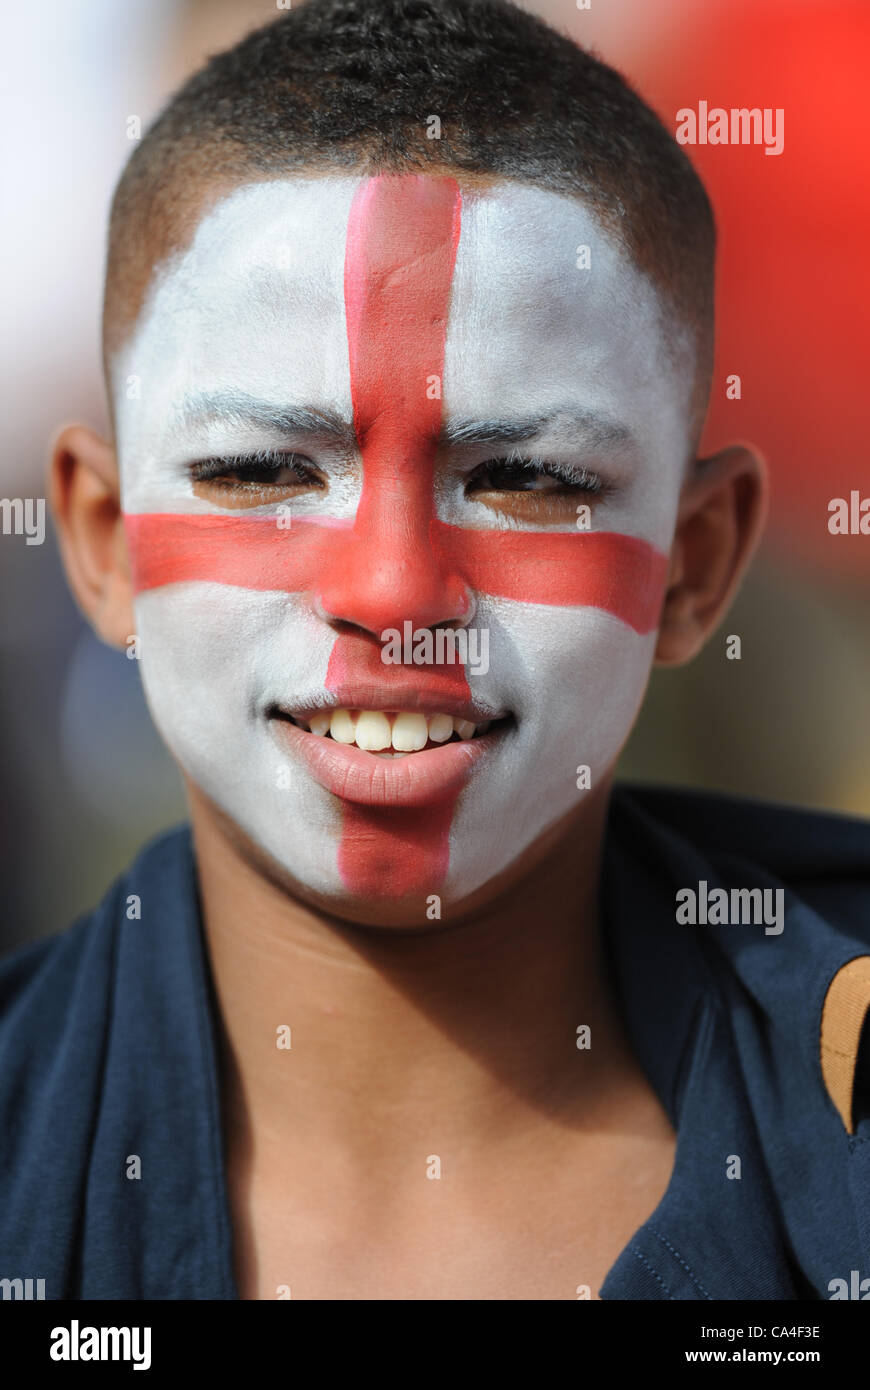 A YOUNG ENGLAND FAN WITH A PAI ENGLAND V BELGIUM WEMBLEY STADIUM LONDON ENGLAND 02 June 2012 Stock Photo